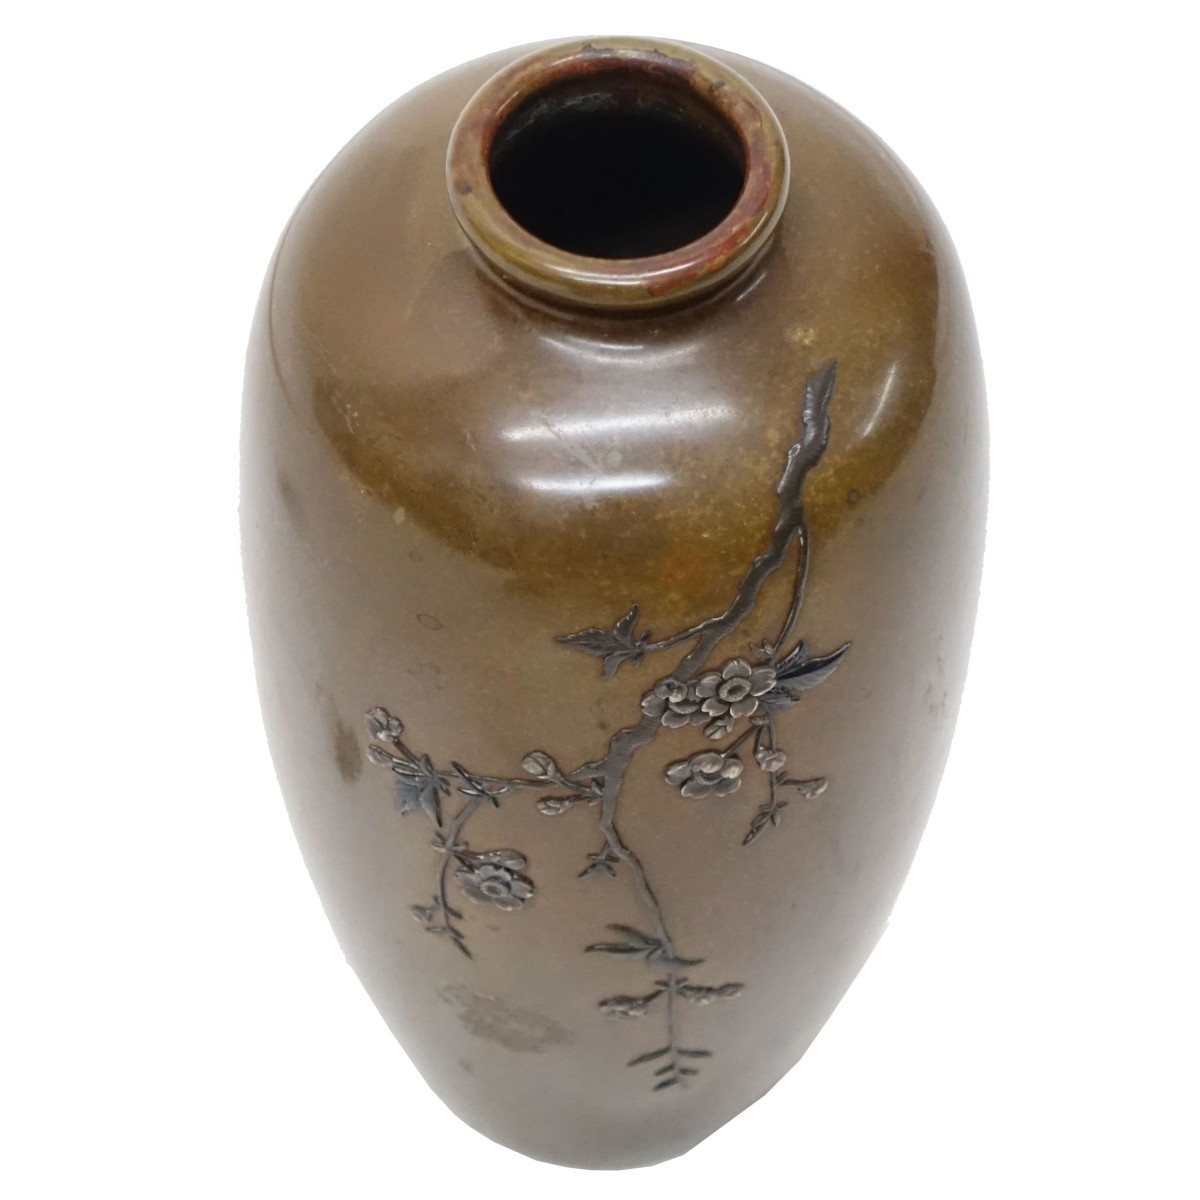 Japanese Vase